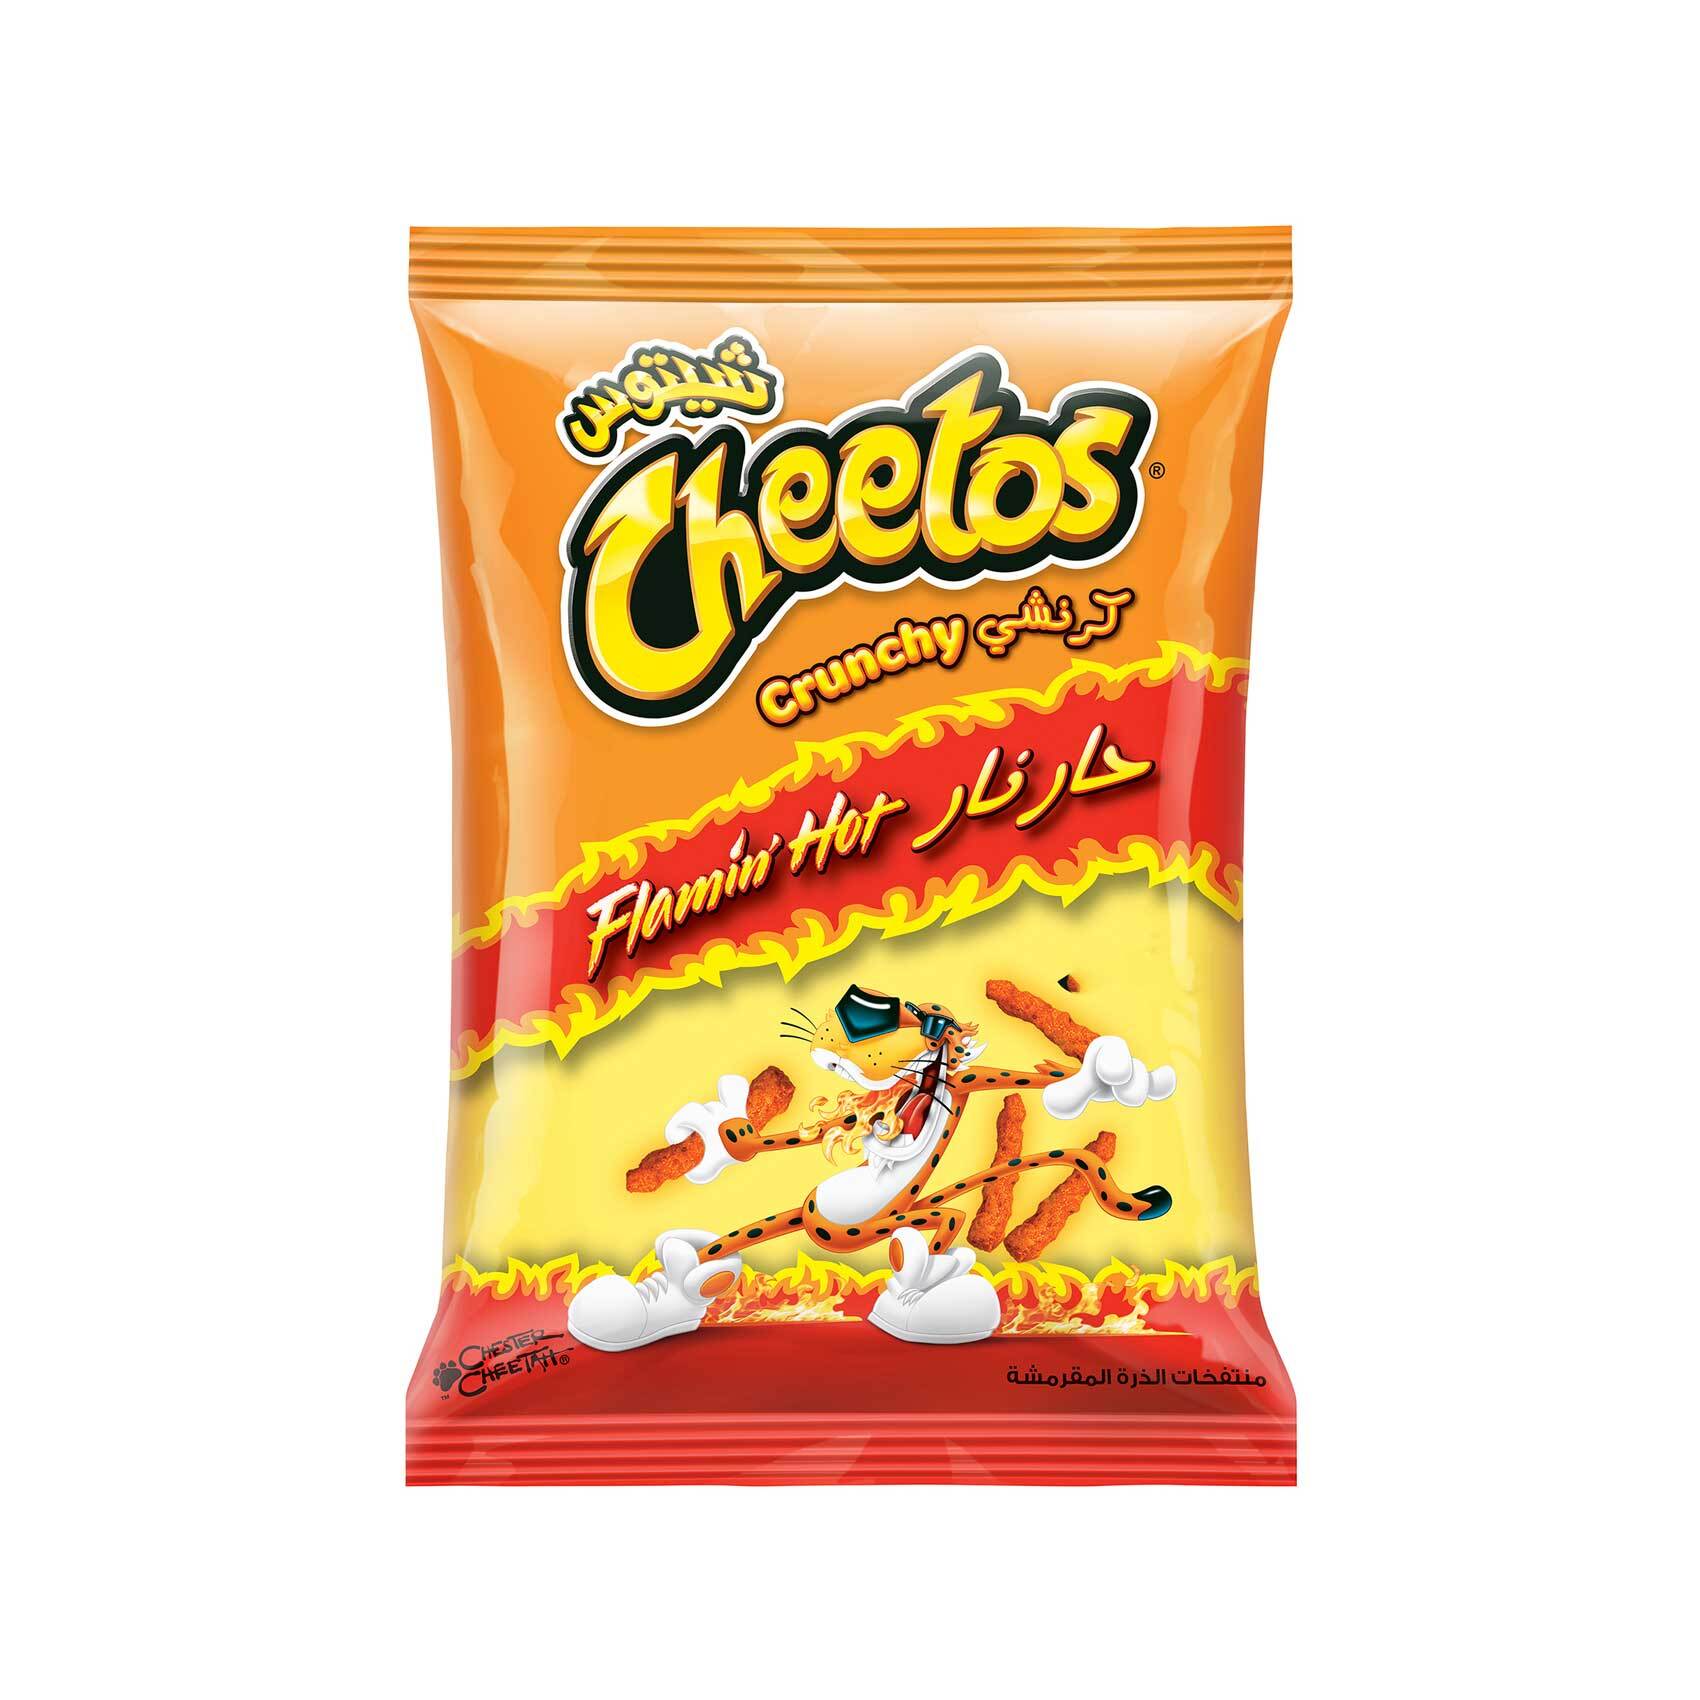 Buy Cheetos Crunchy Tomato Corn Crisp at Tofu Cute